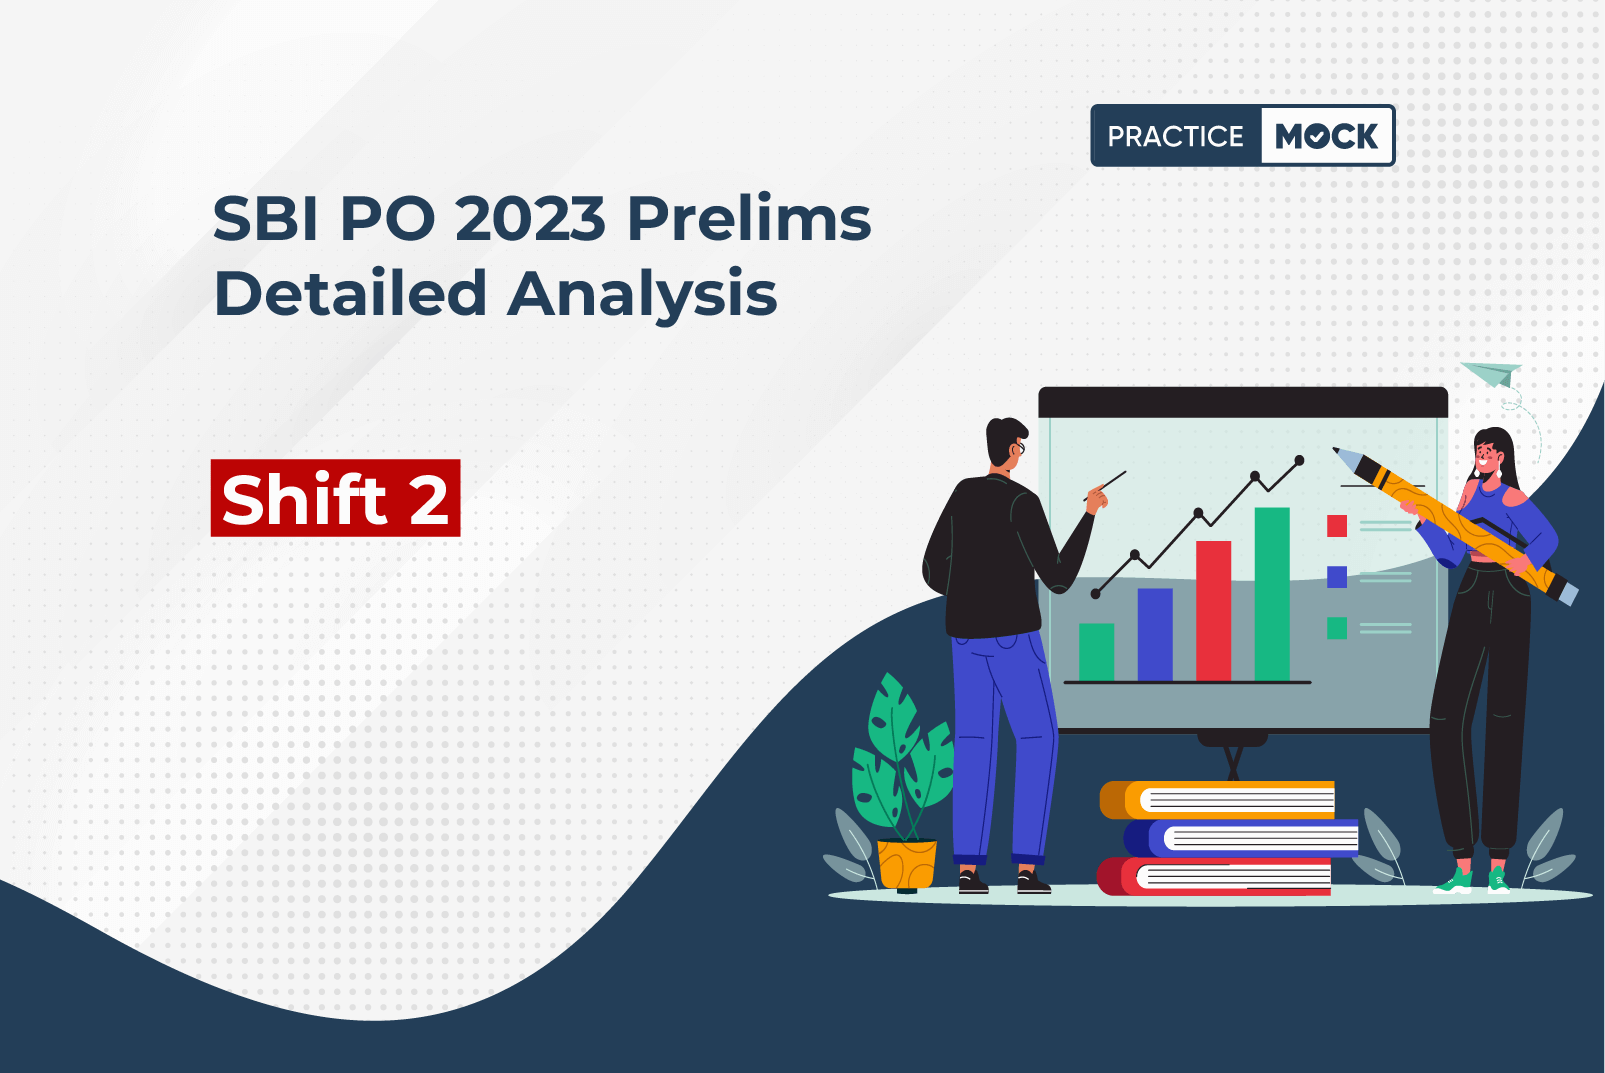 SBI PO 2023 Prelims Shift 2 Detailed Analysis (1)